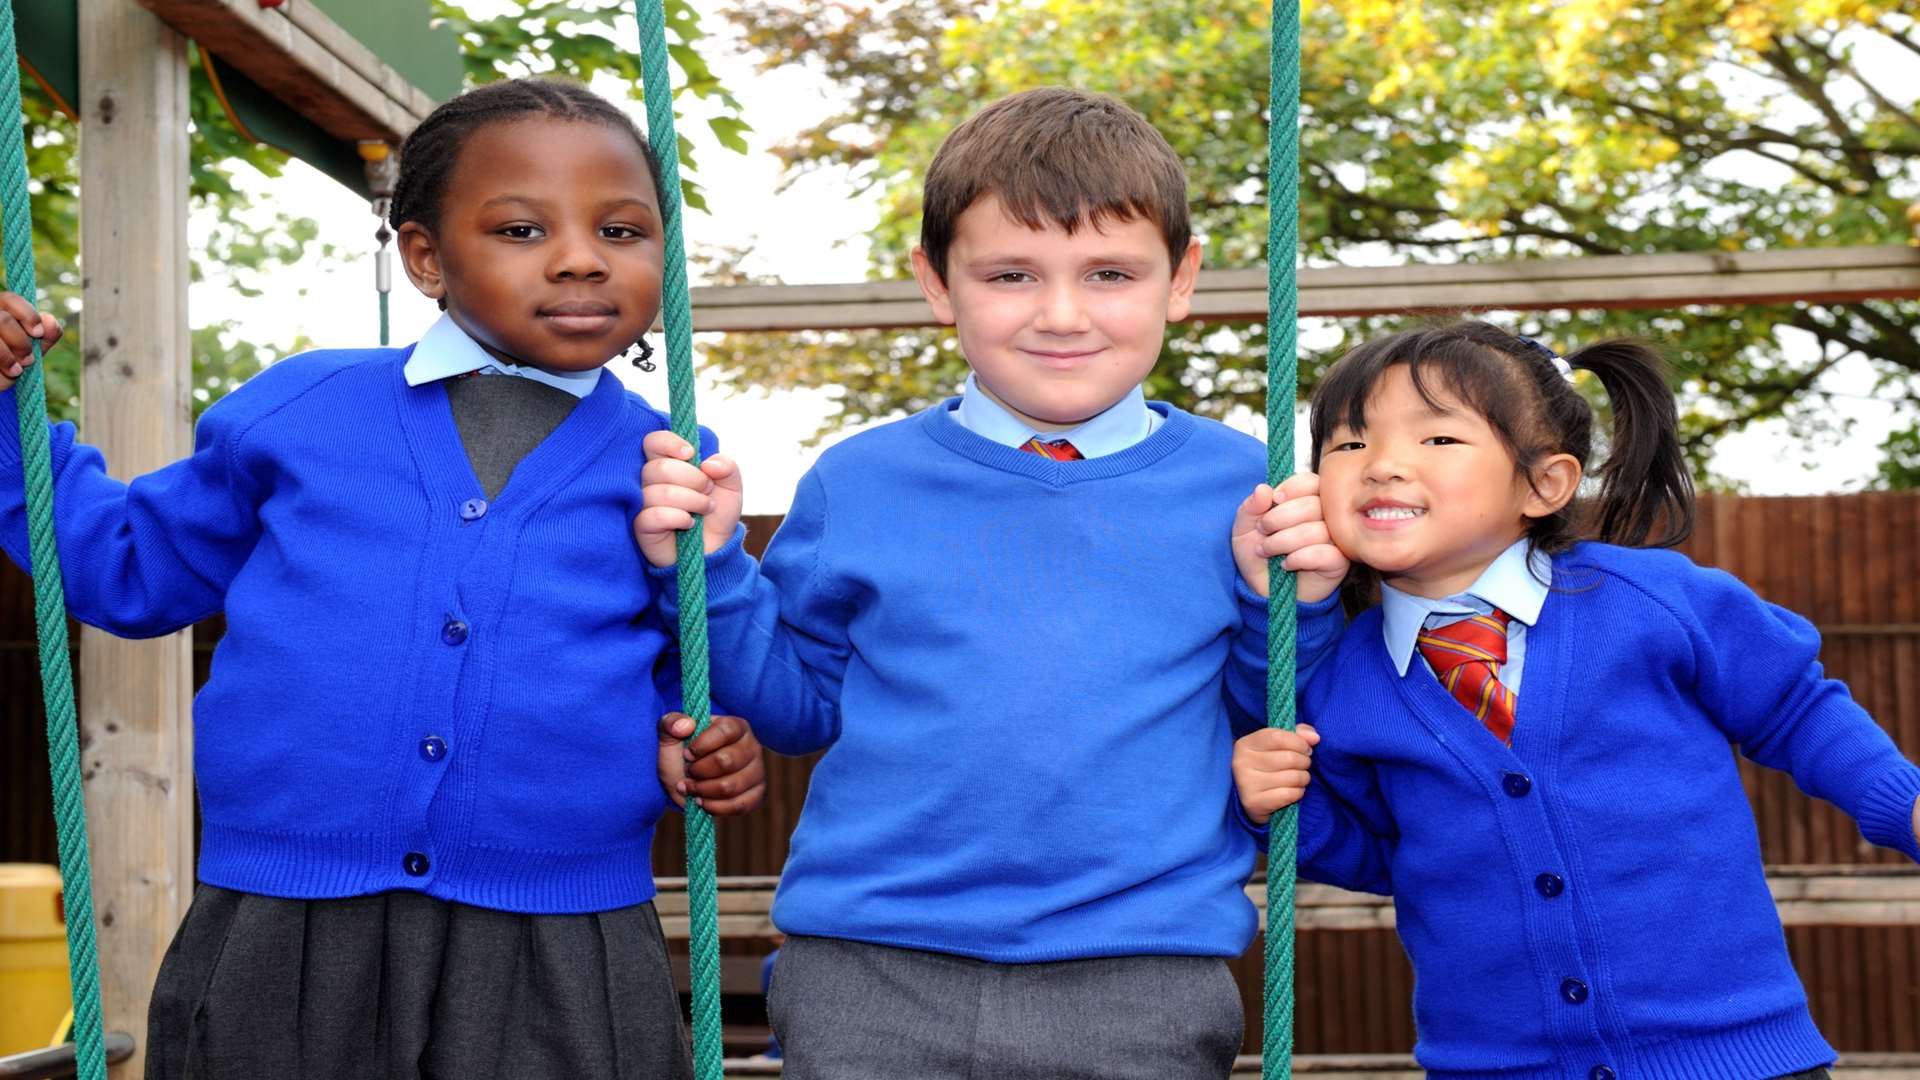 Children from St Bartholomew's Catholic Primary School in Swanley